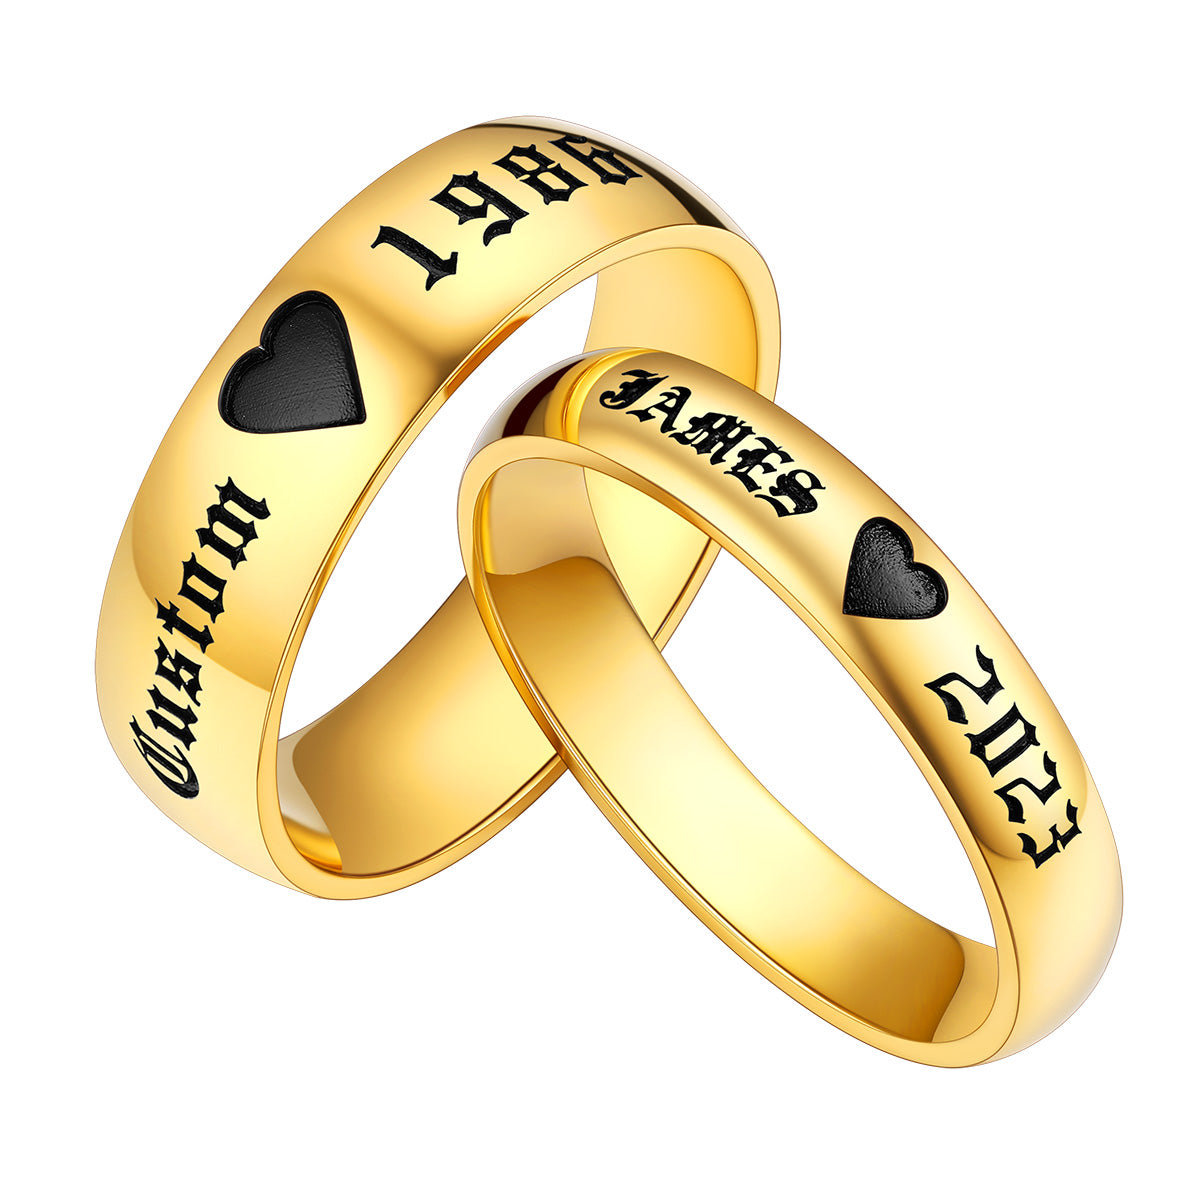 Youbella Black Gold-toned Couple Ring Set | Ybmyn49063